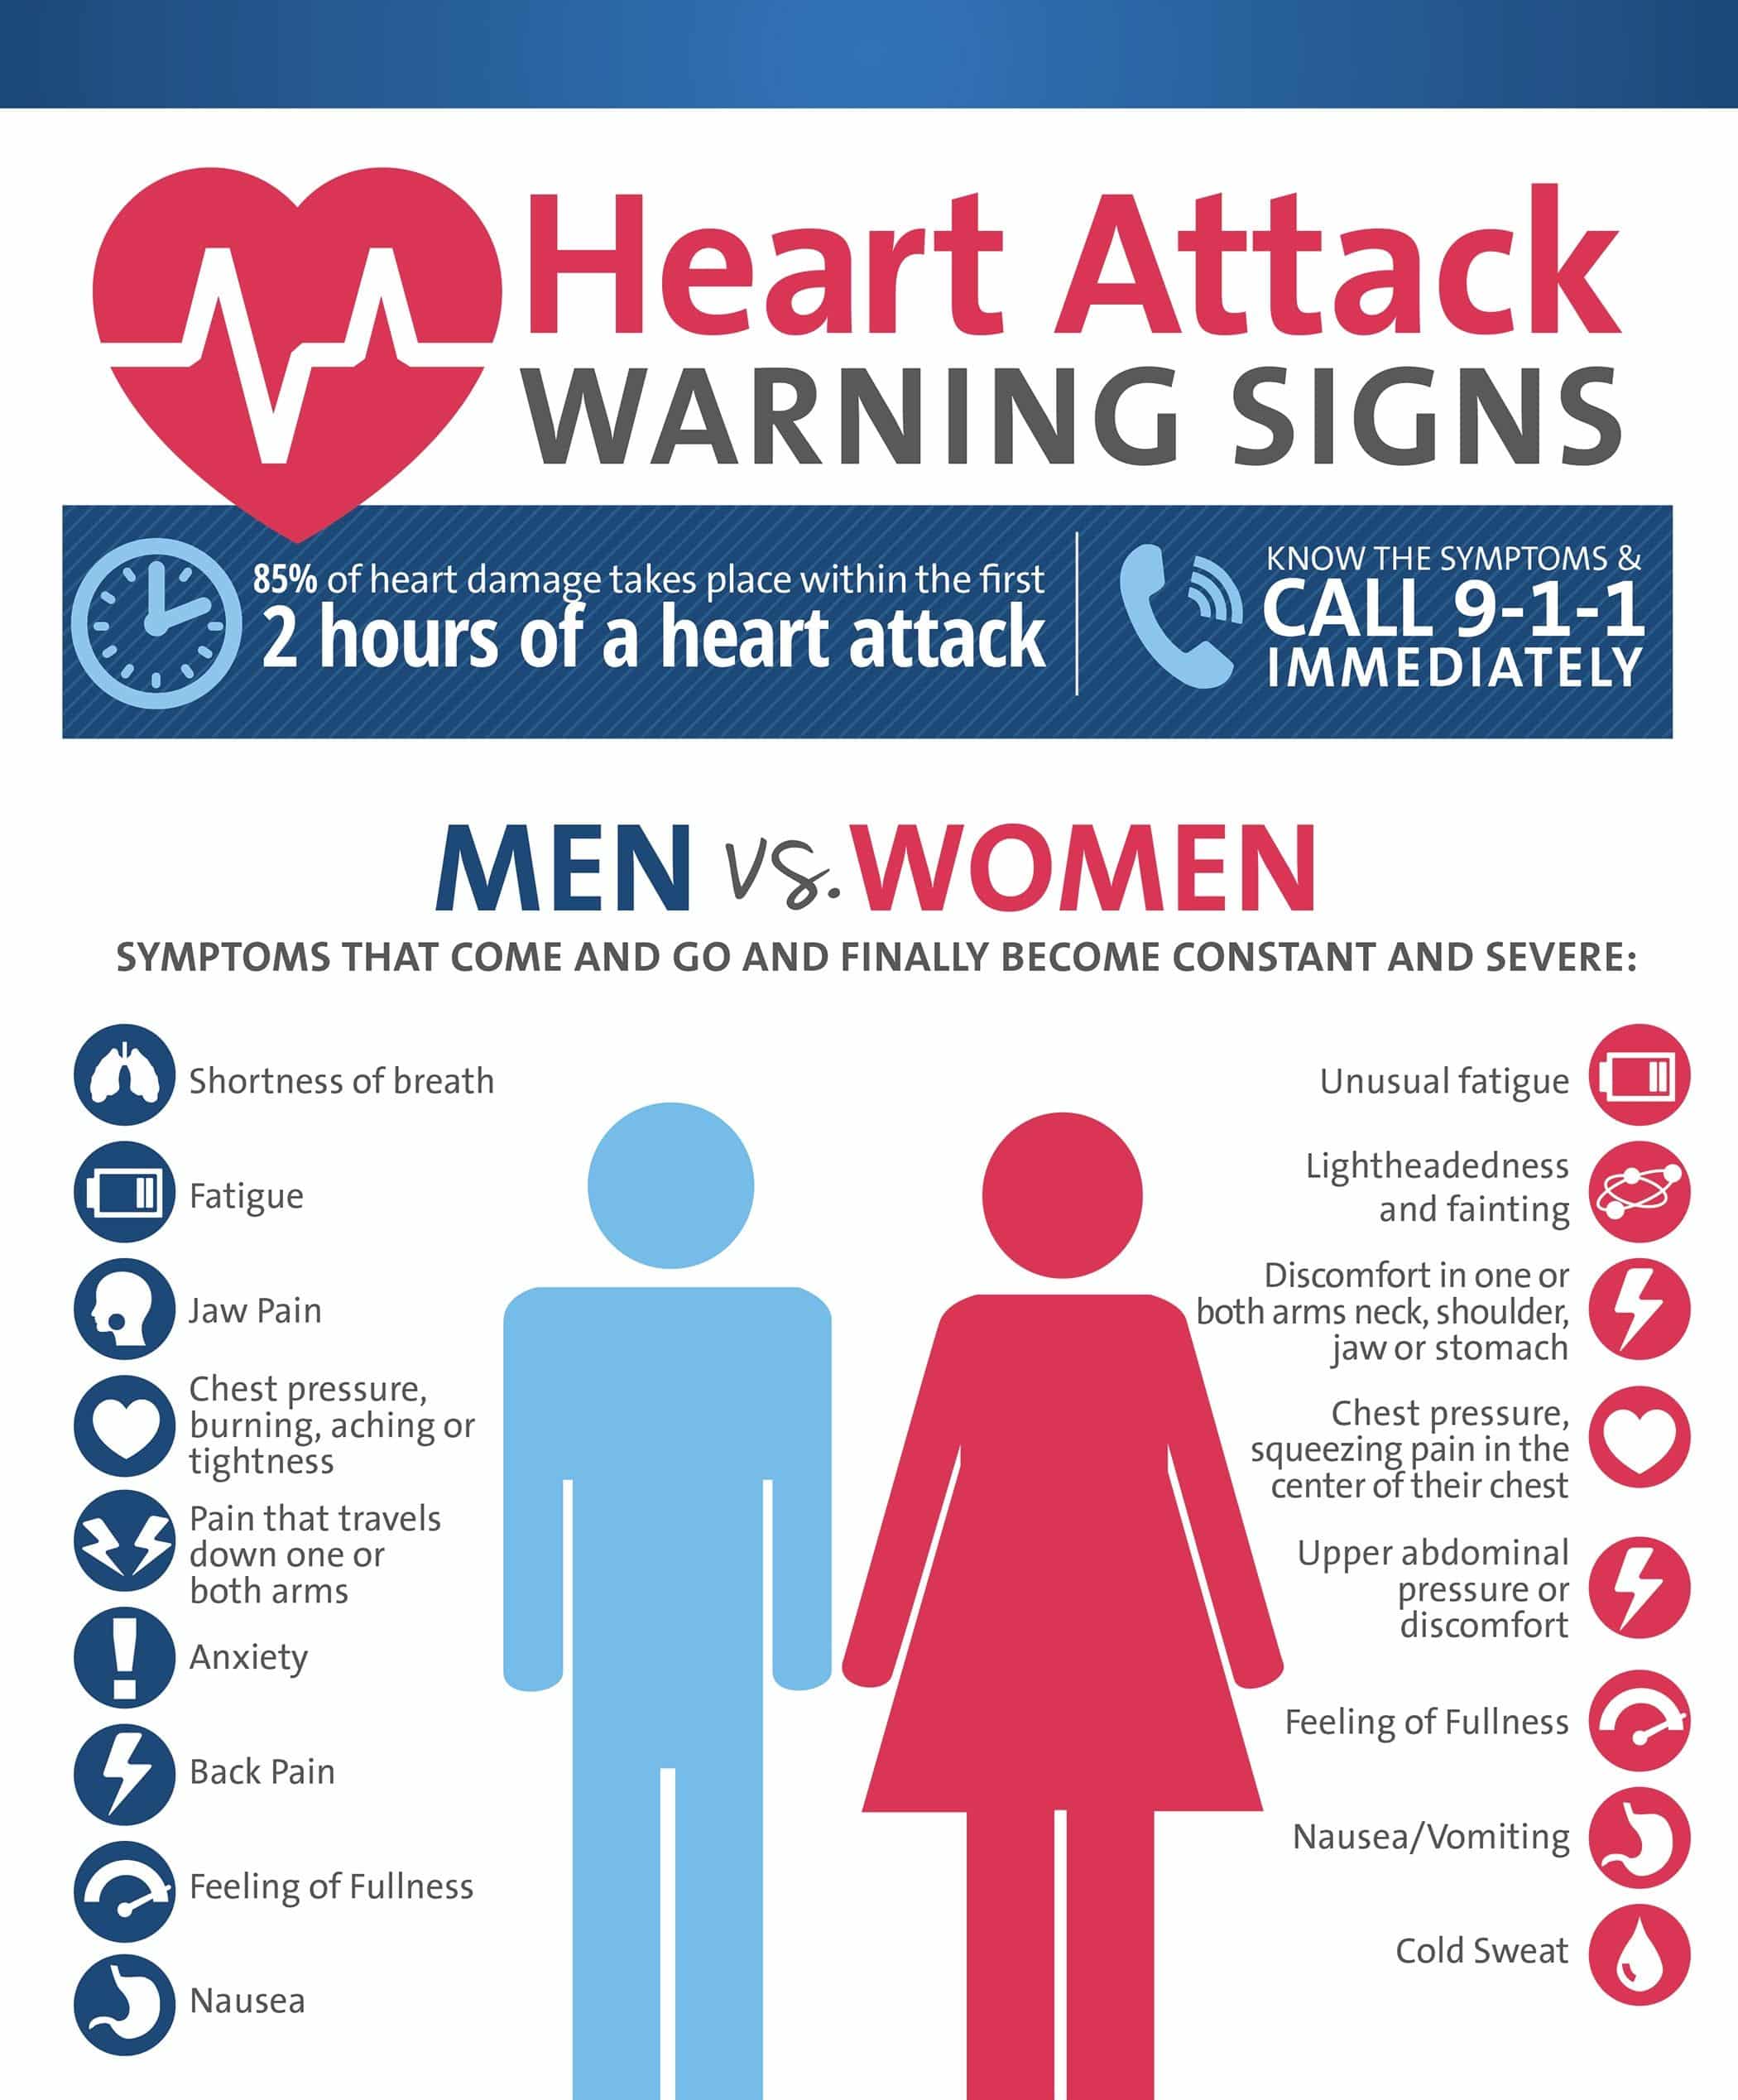 HEART ATTACK WARNING SIGNS